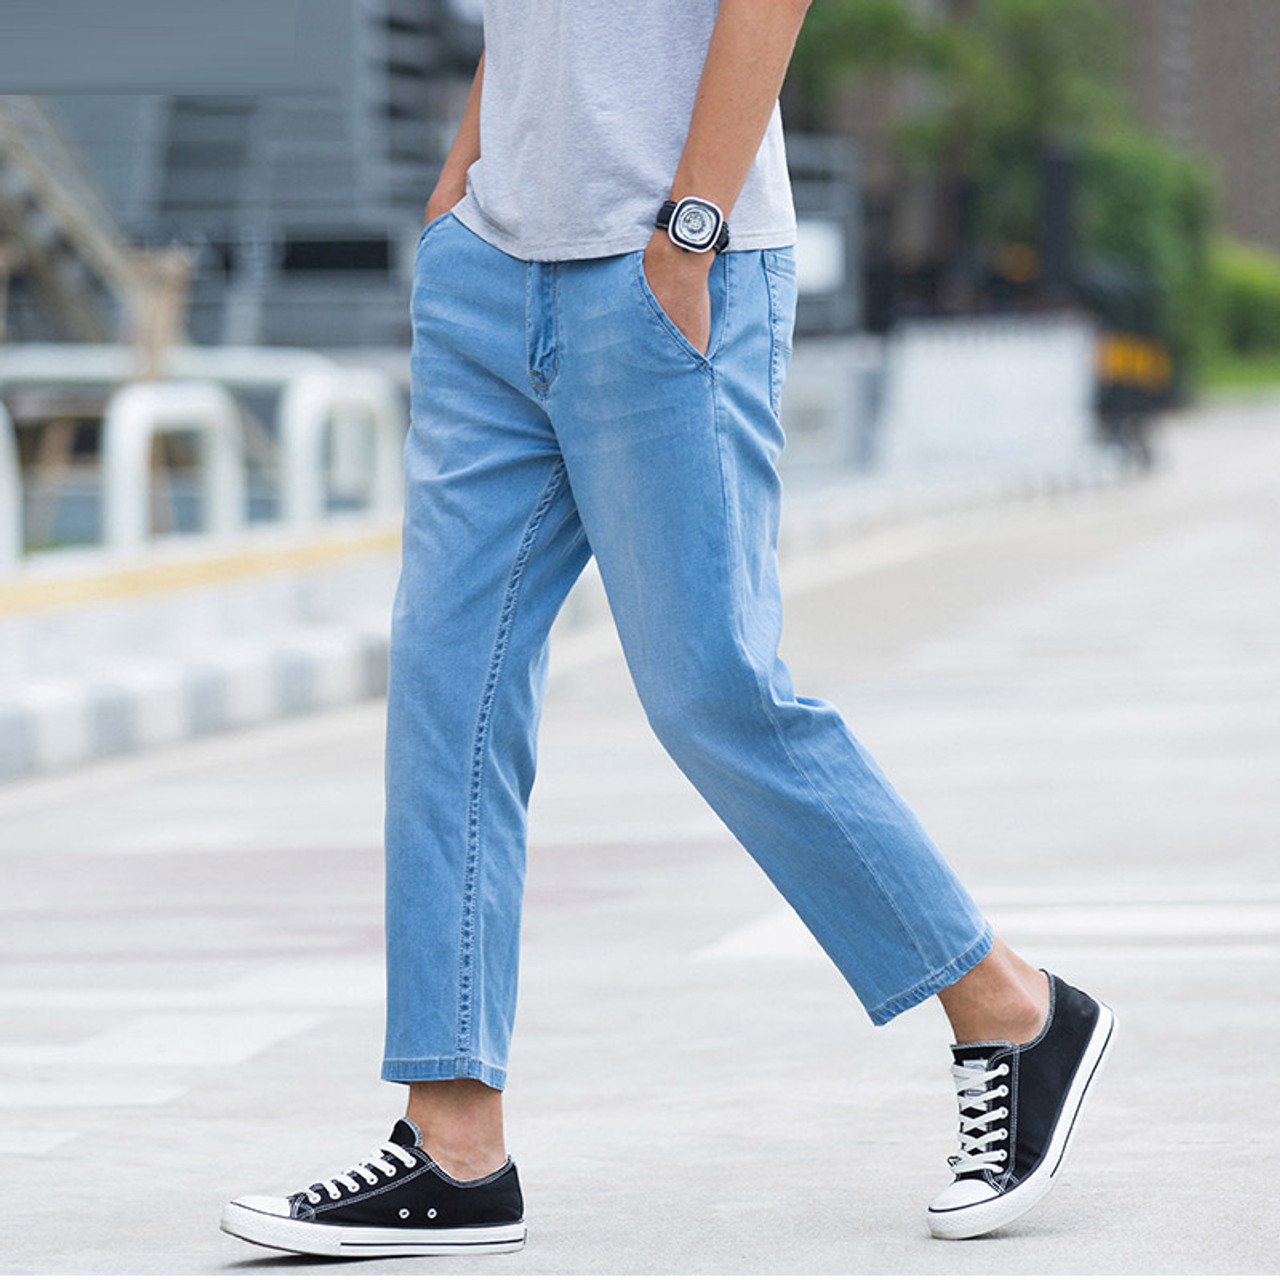 Estrolo | Buy Dark Blue Jeans Pants For Men | Stretchable Slim-fit